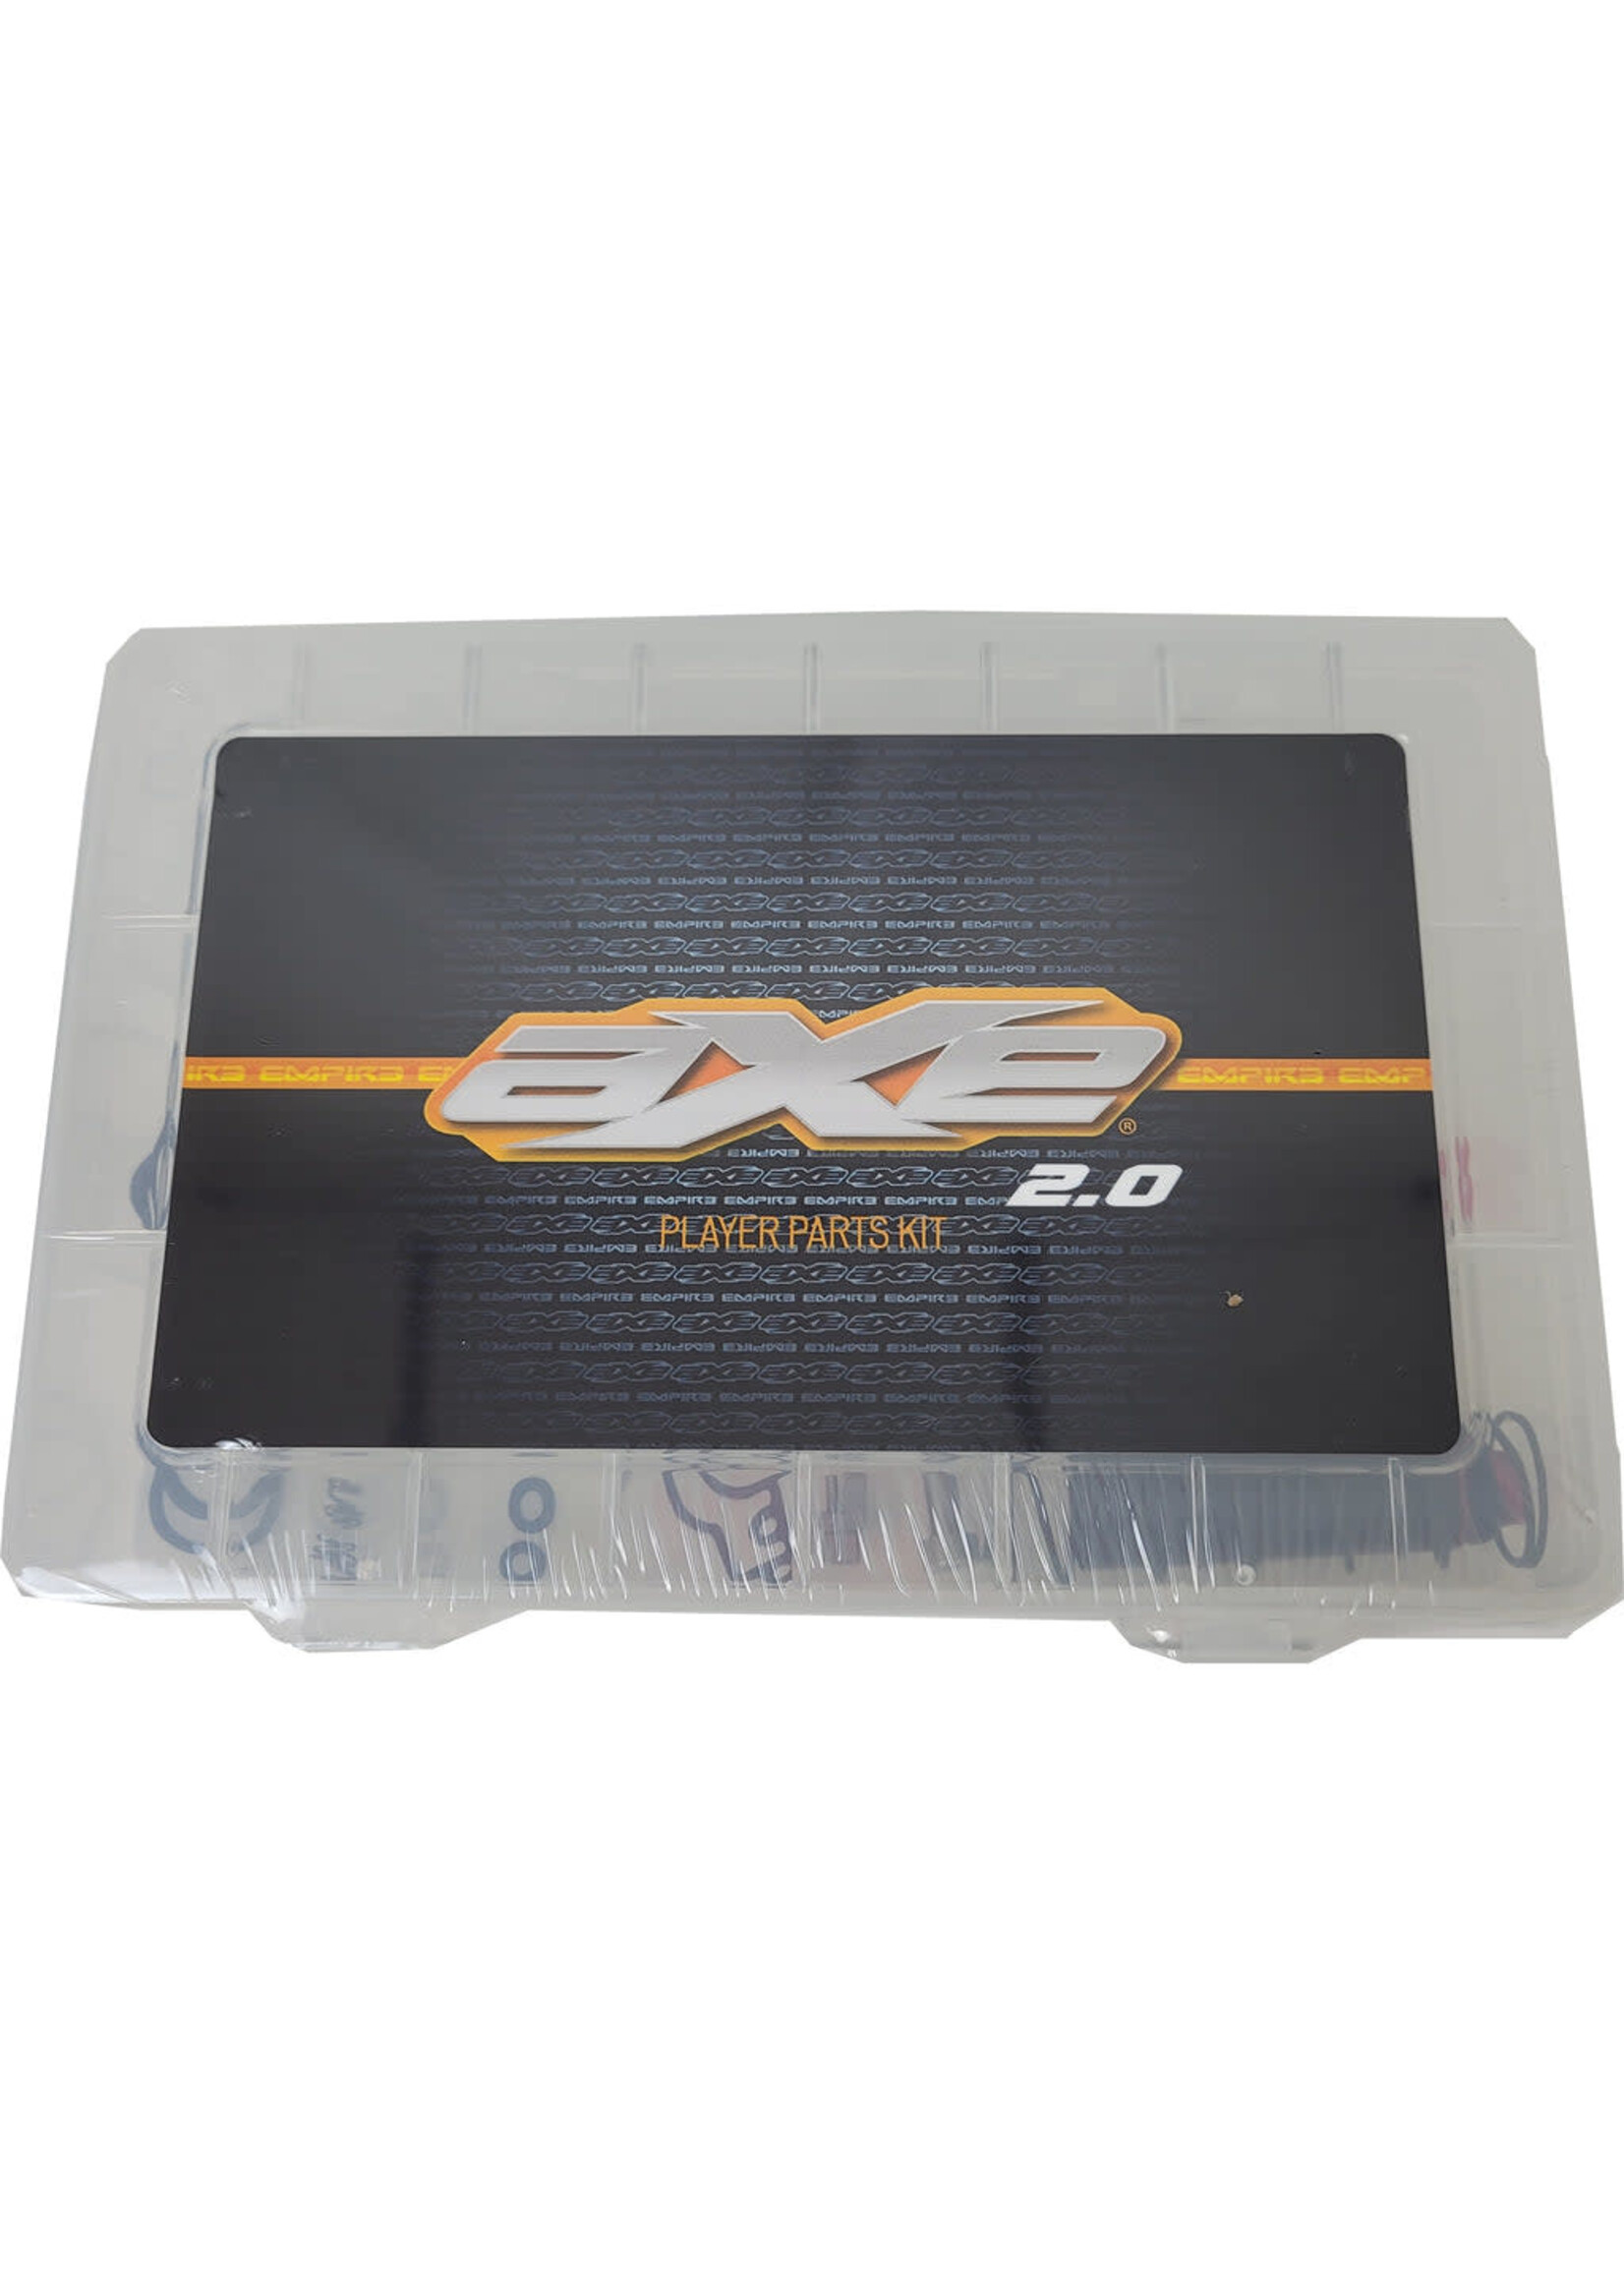 EMPIRE Empire Axe 2.0 Parts Kit - Parts for Axe 2.0 Marker